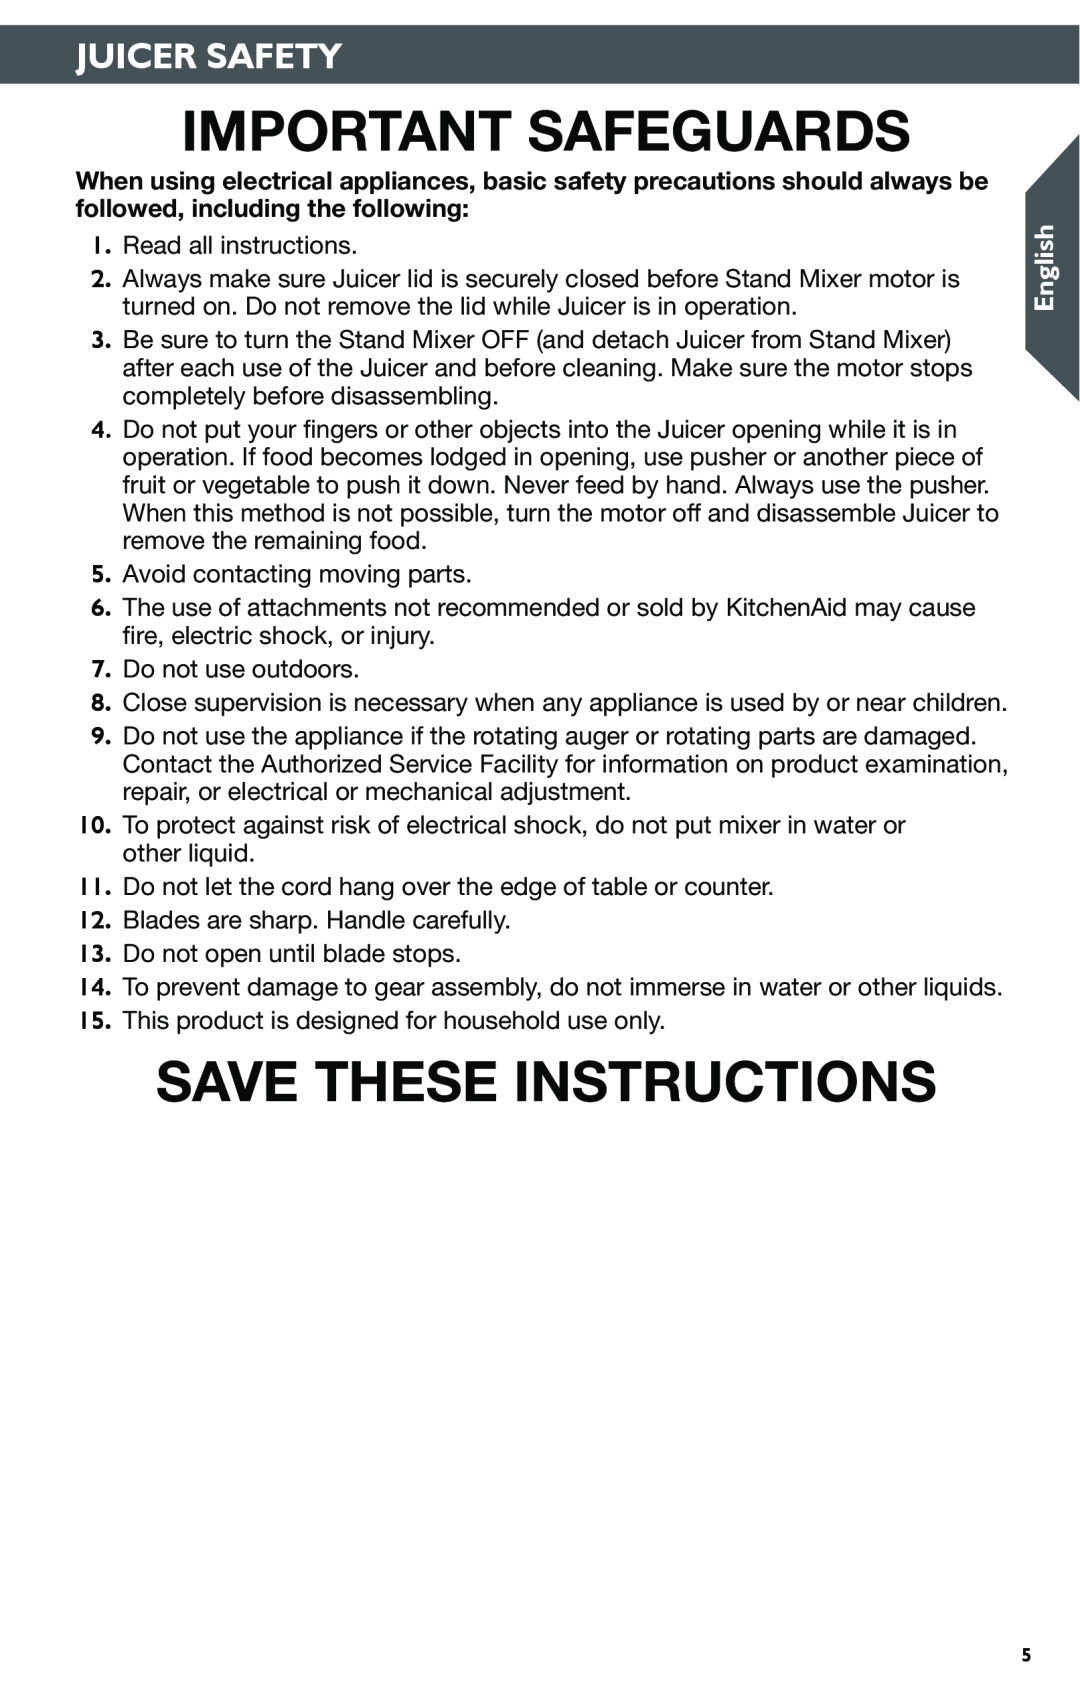 KitchenAid KSN1JA manual Important Safeguards, Save These Instructions, Juicer Safety, English 